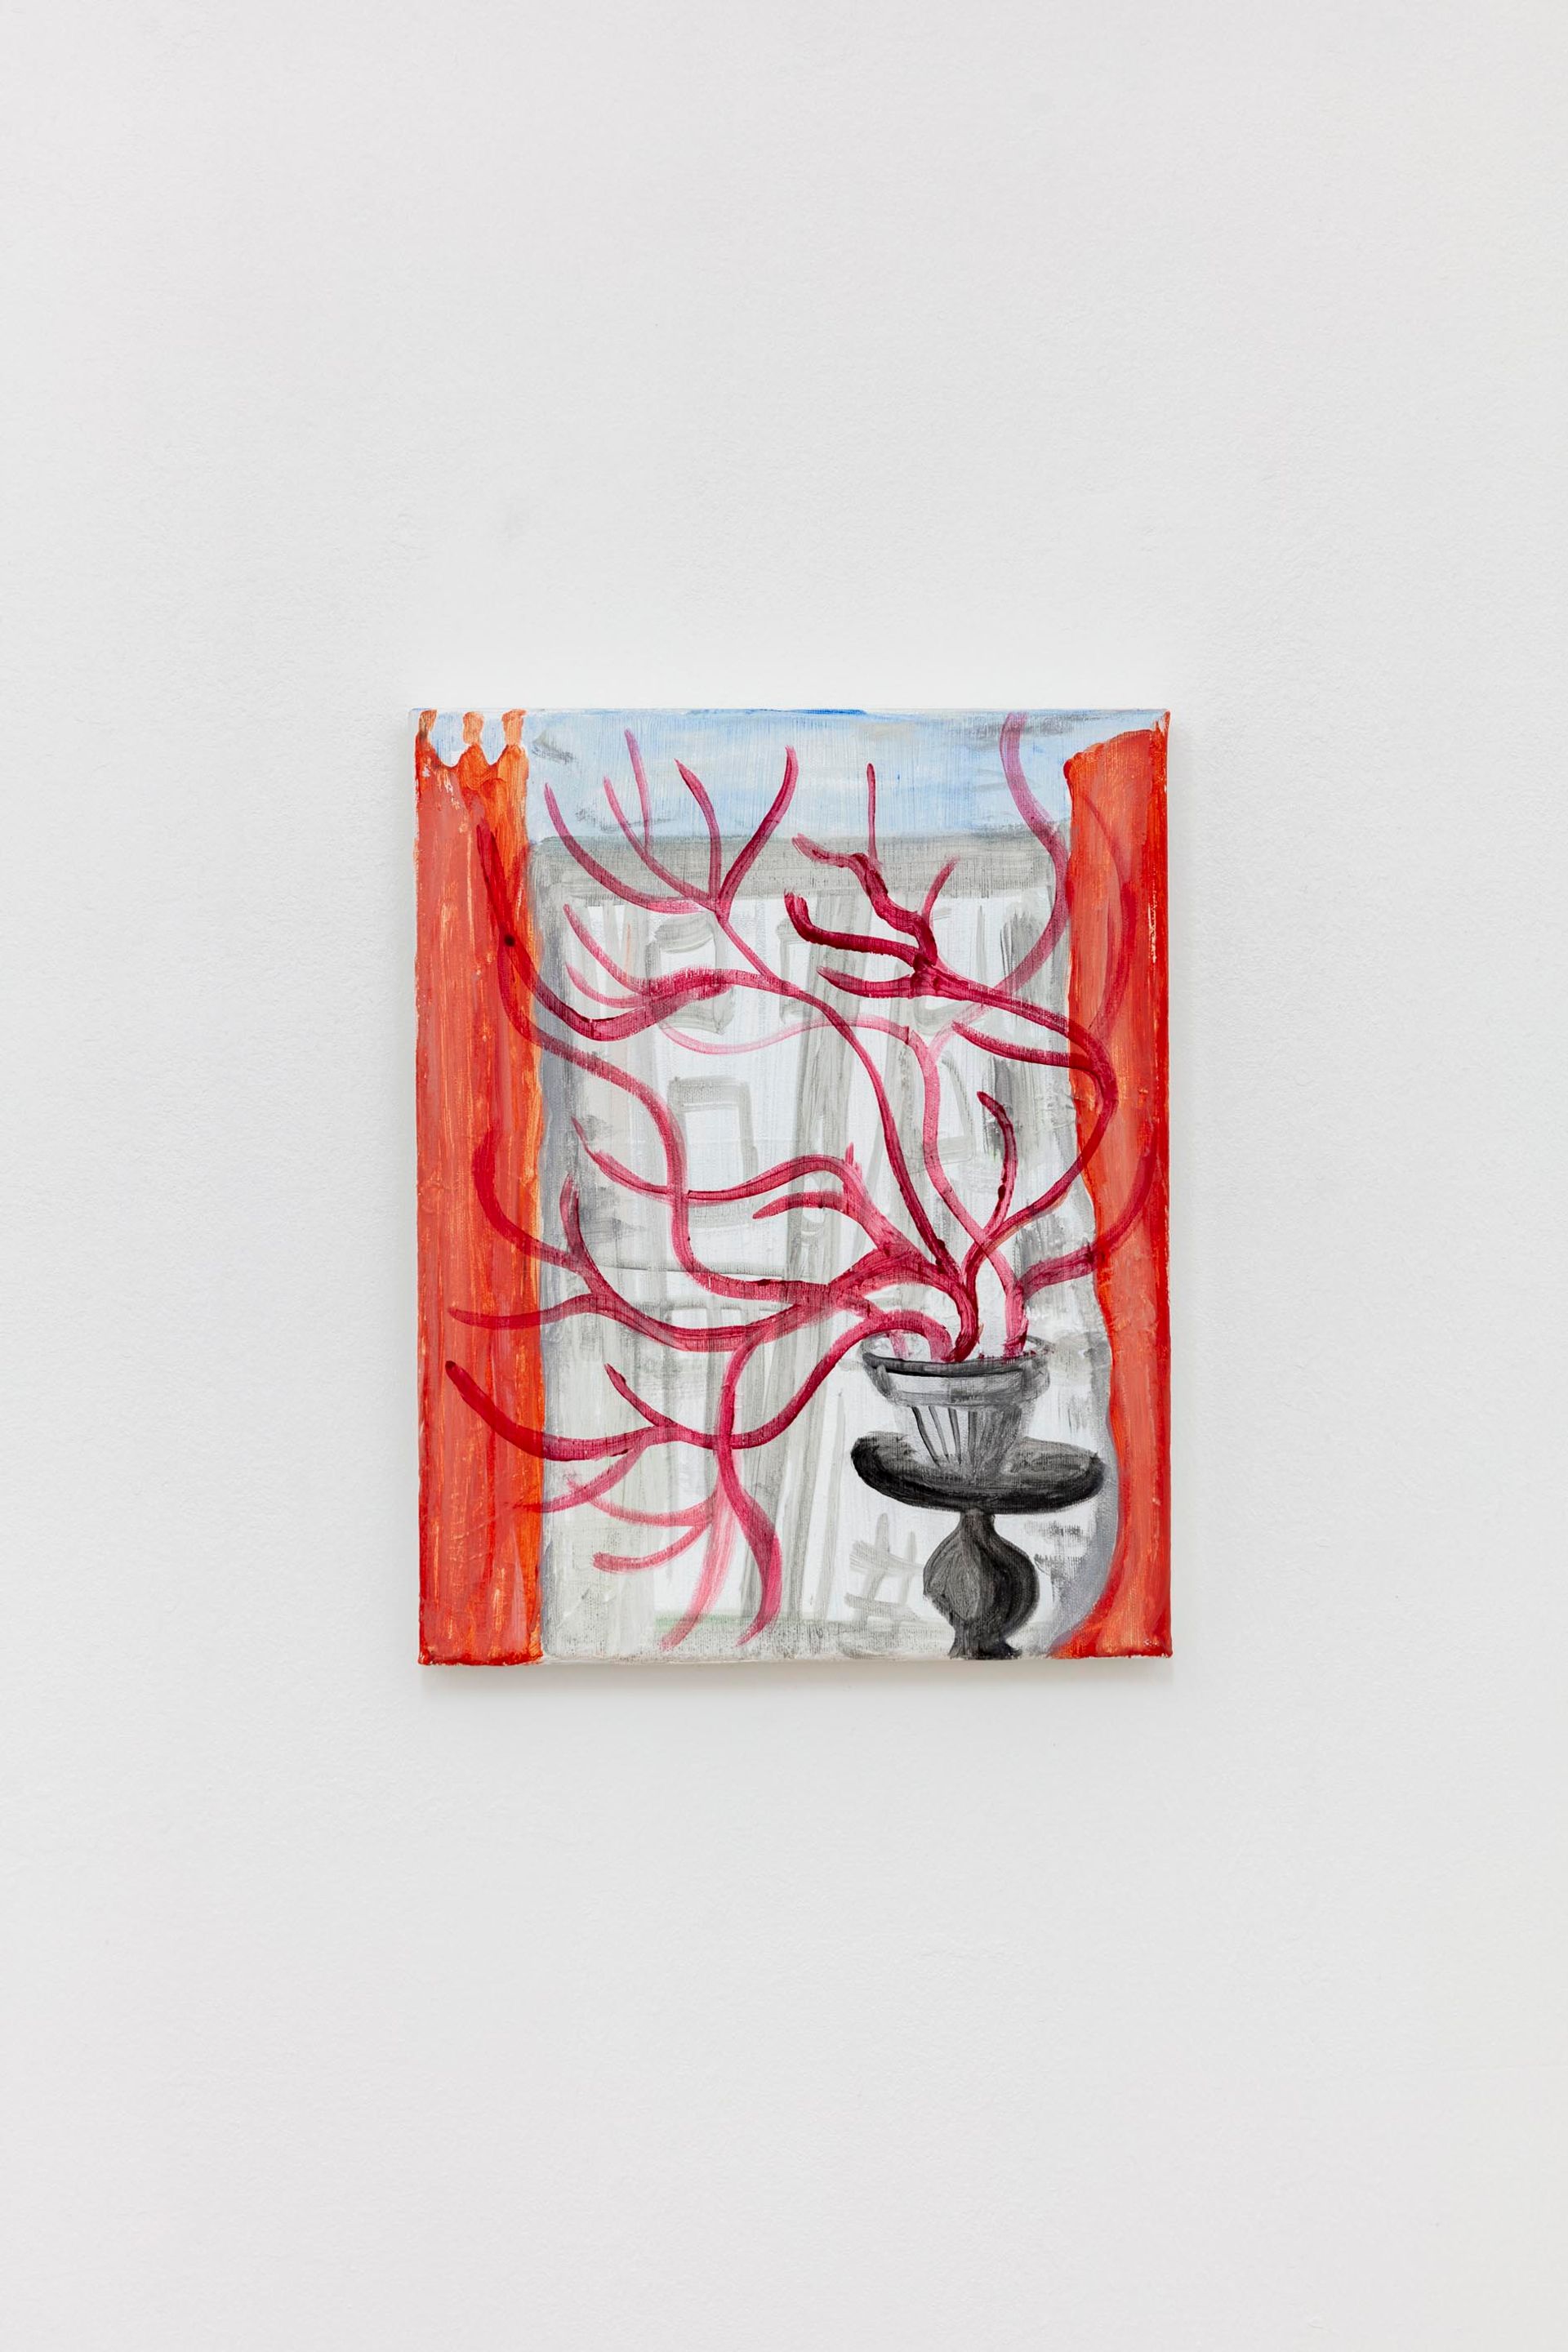 Anna McCarthy, “Westend Plant”, 2021, acrylic on canvas, 30 × 24cm  